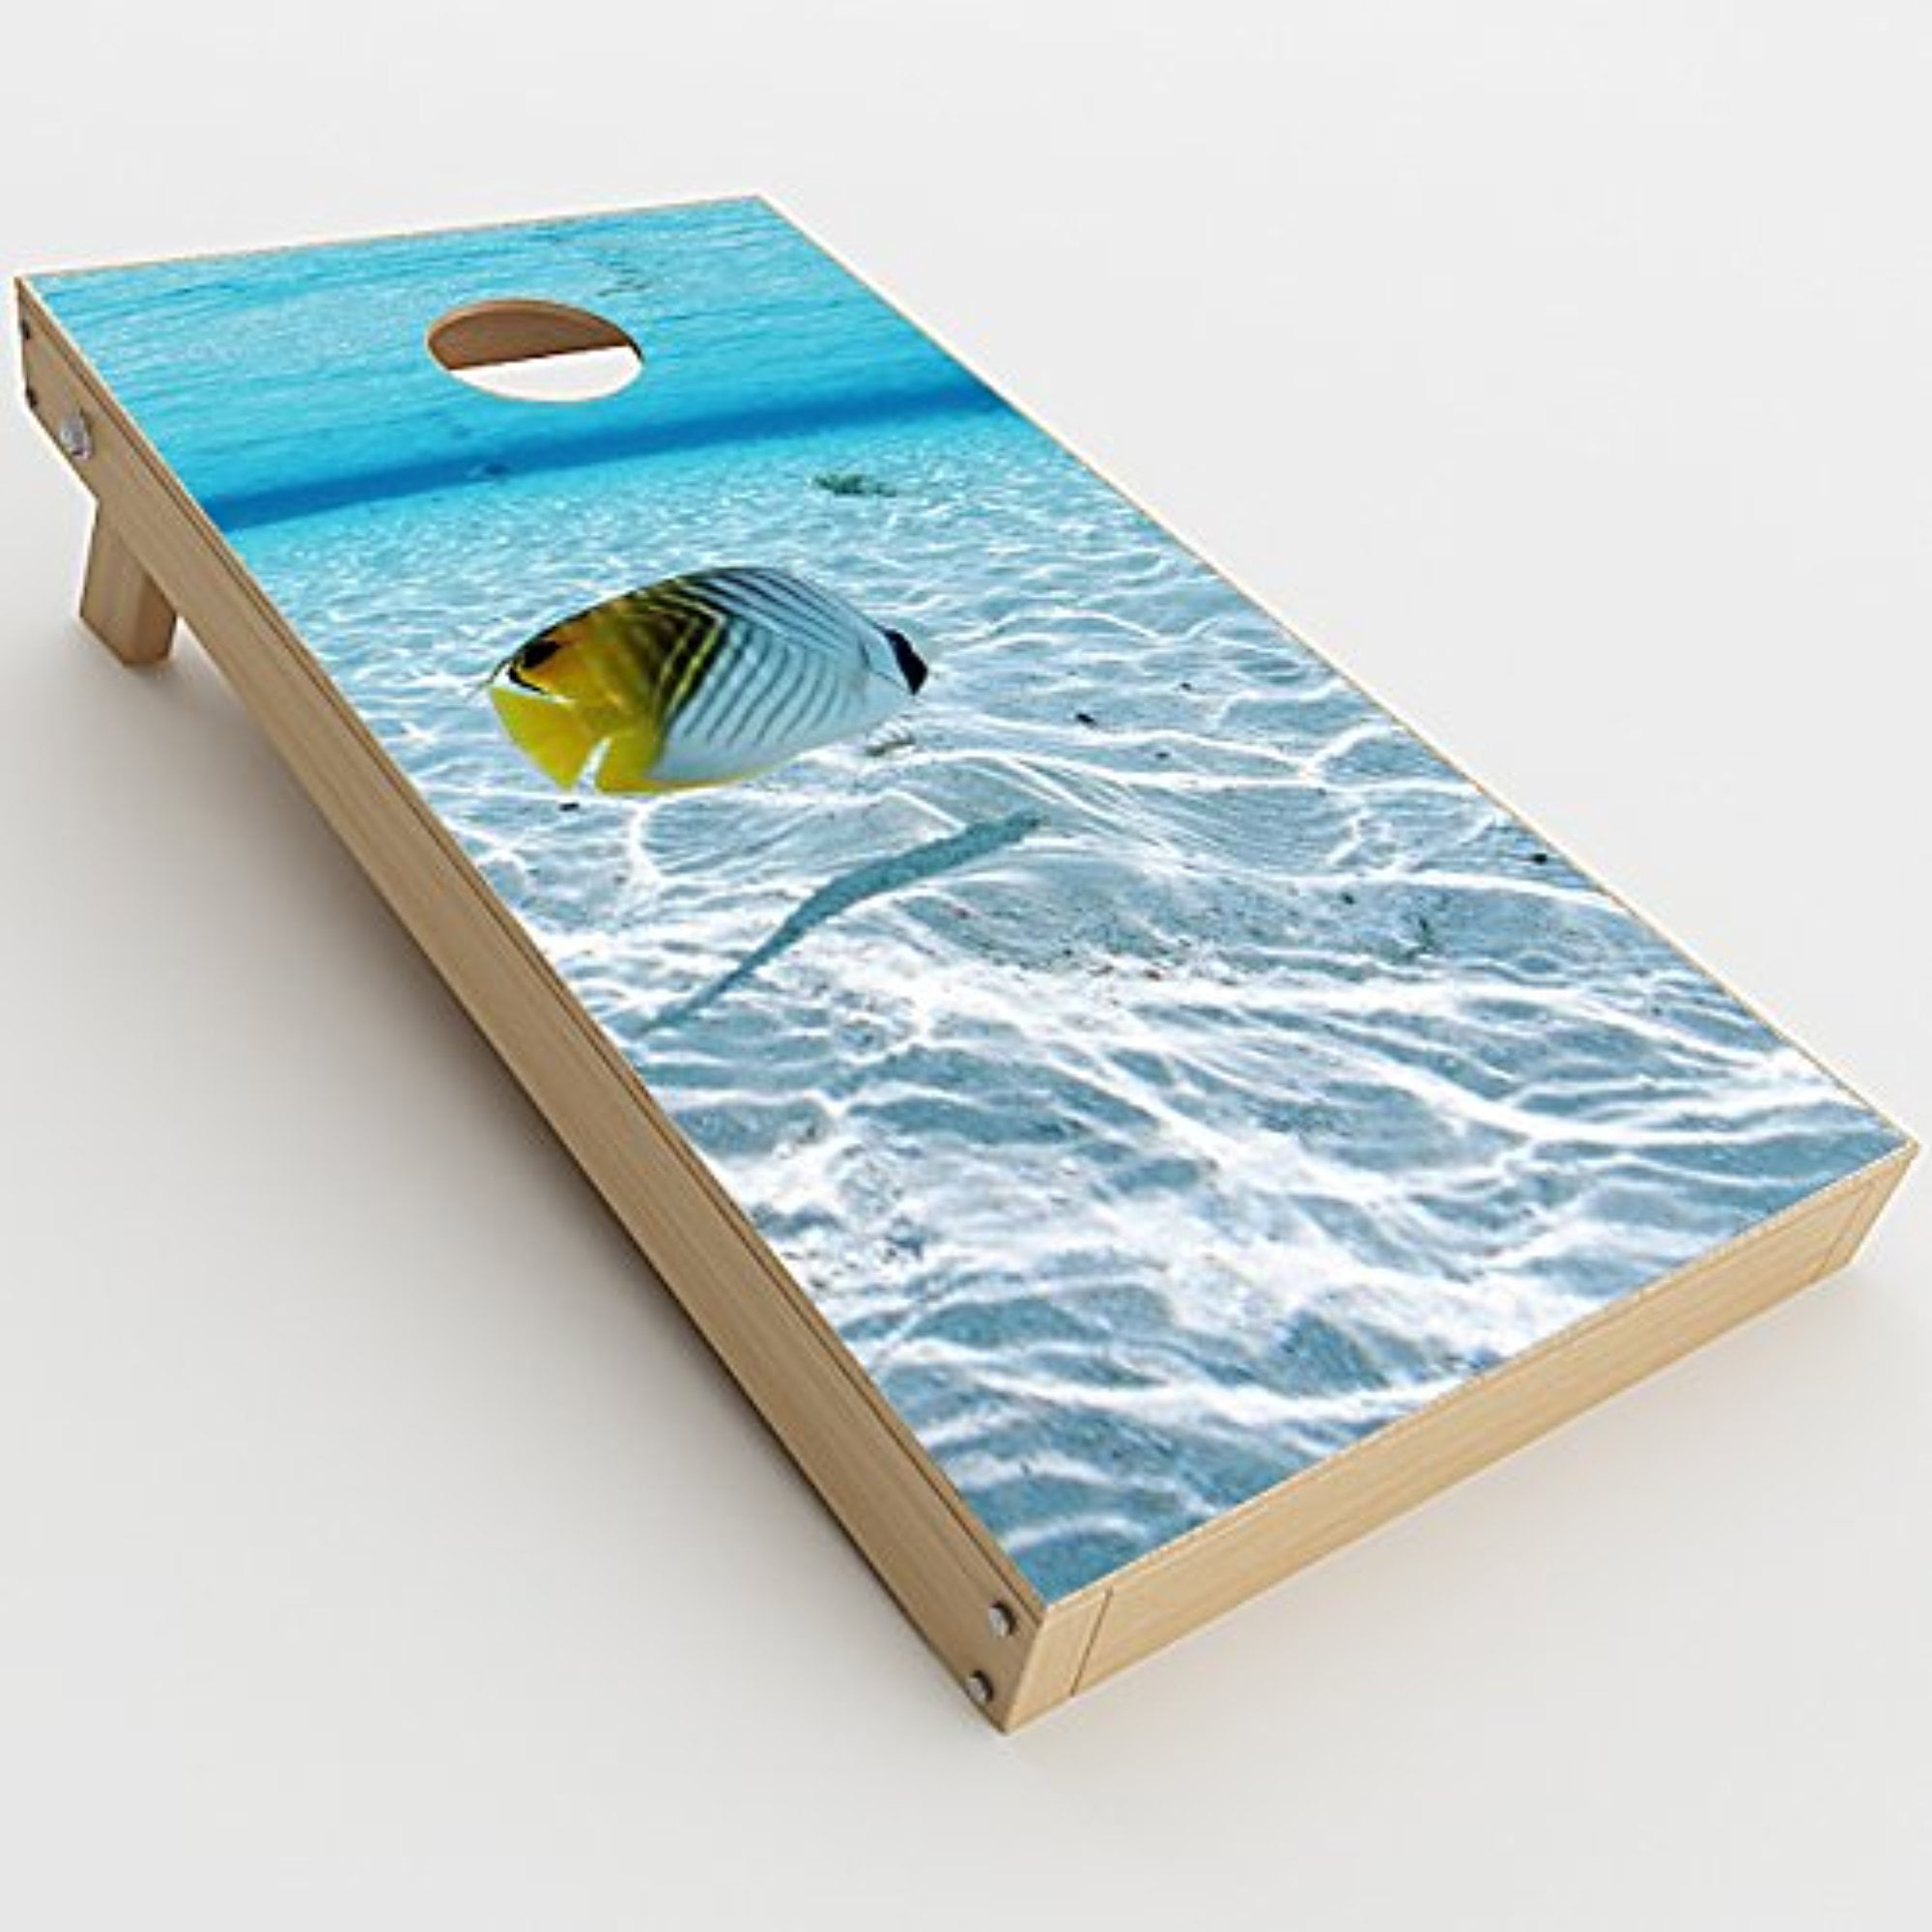 2xpcs. Skin Decal for Cornhole Game Board / Beach Wood Panels Teal White Wash 